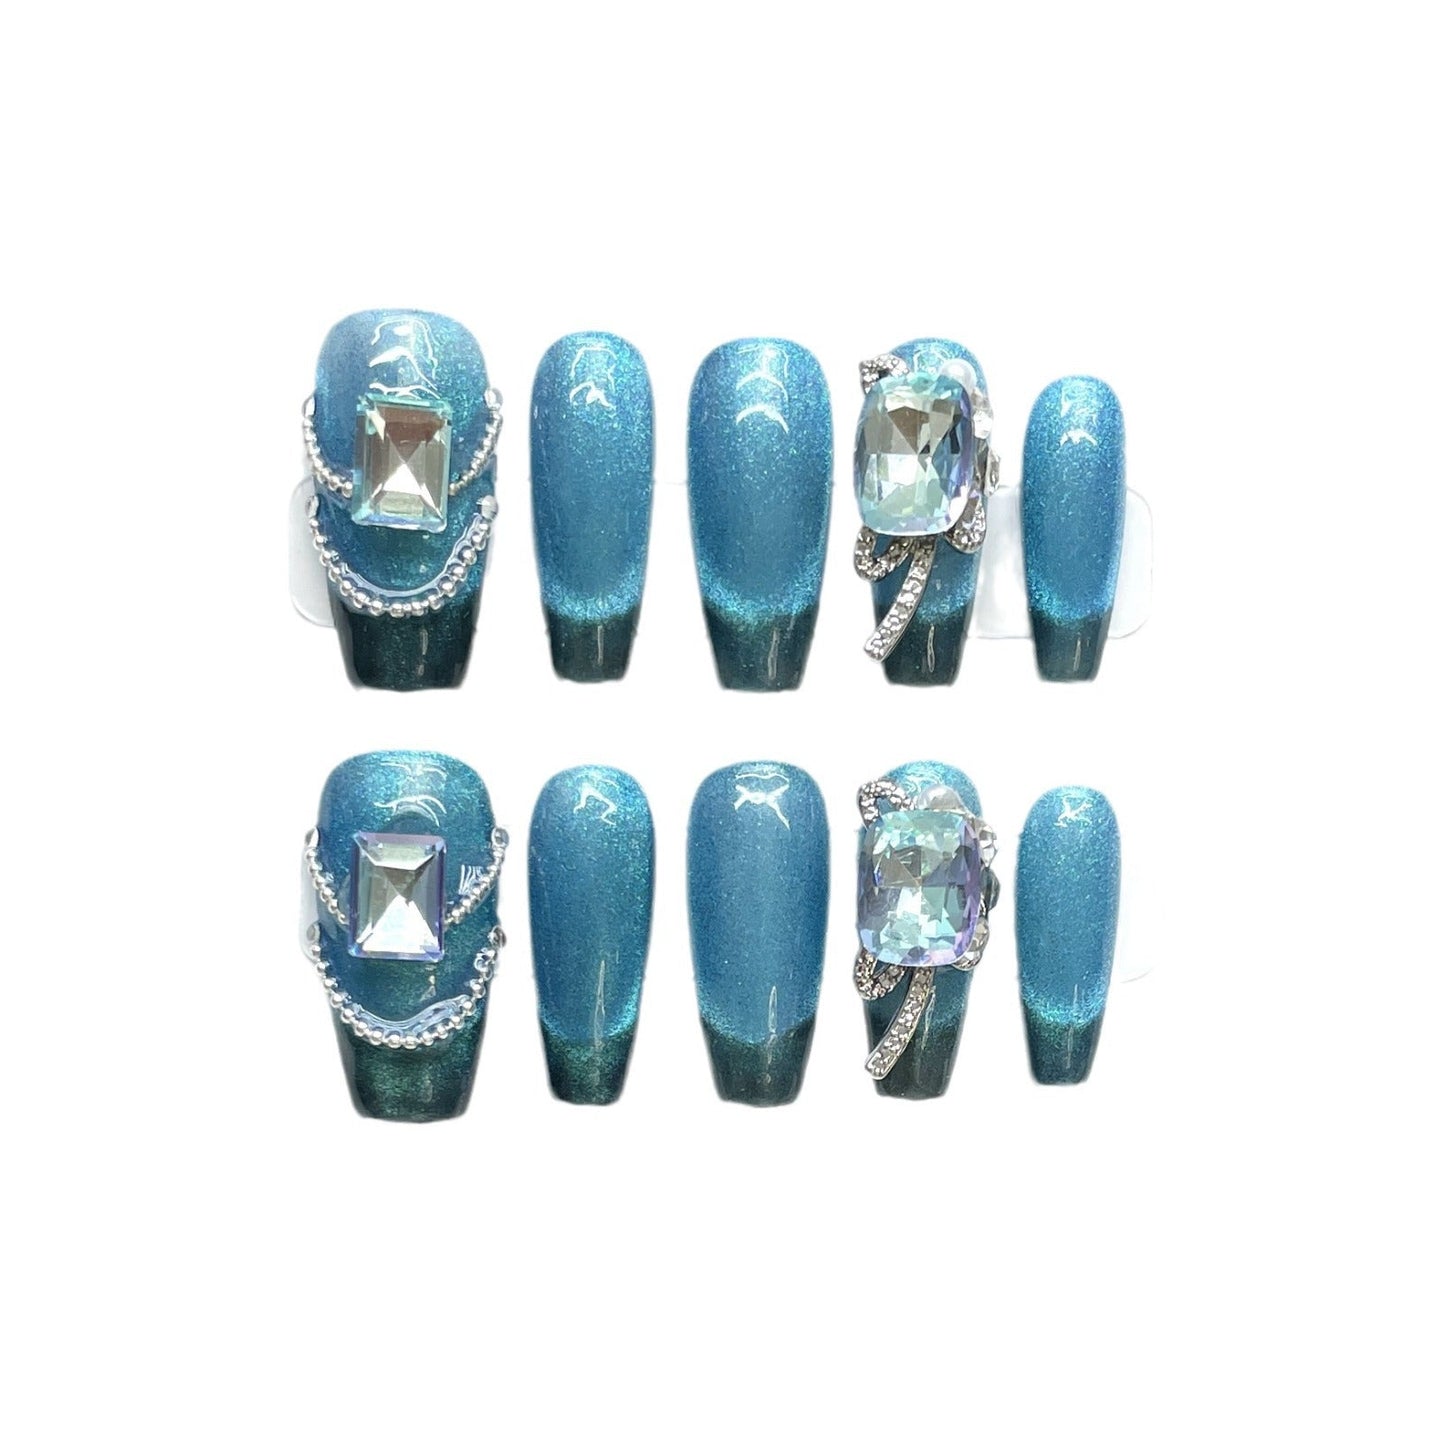 1364 Blue cat's eye style press on nails 100% handmade false nails blue fake nails